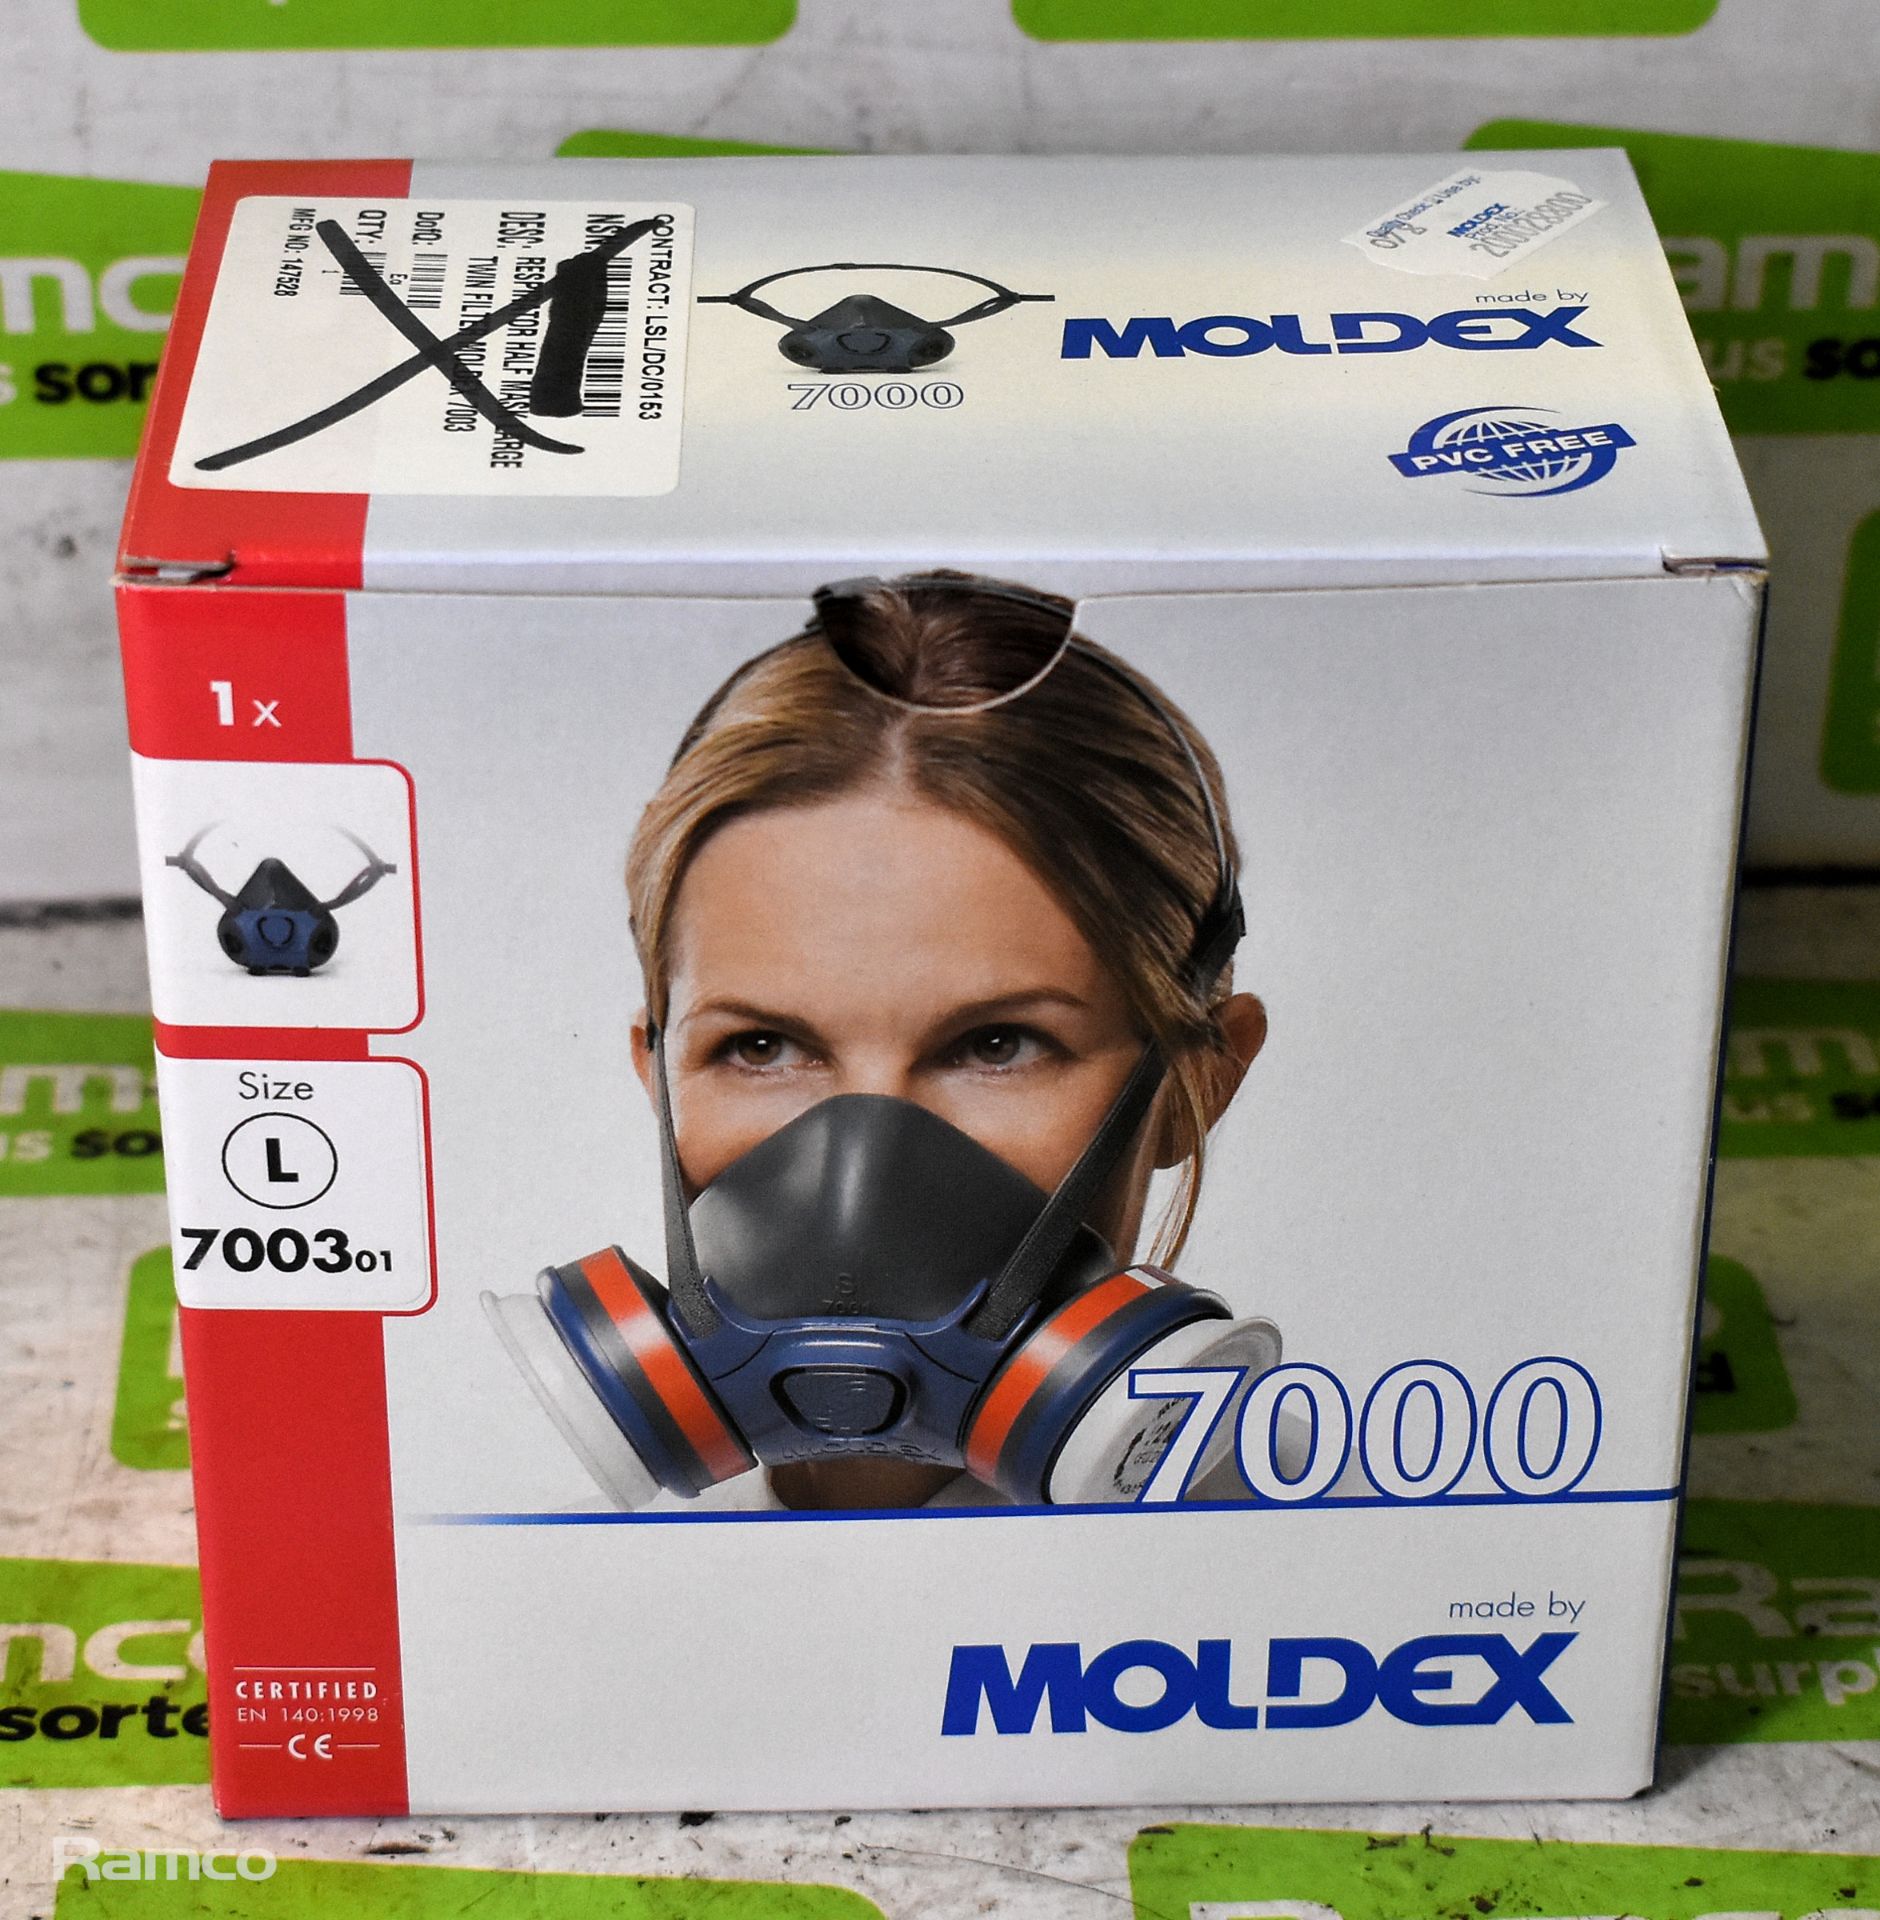 30x Moldex 7000 face masks - size: L - NO FILTER CARTRIDGES - Image 2 of 7